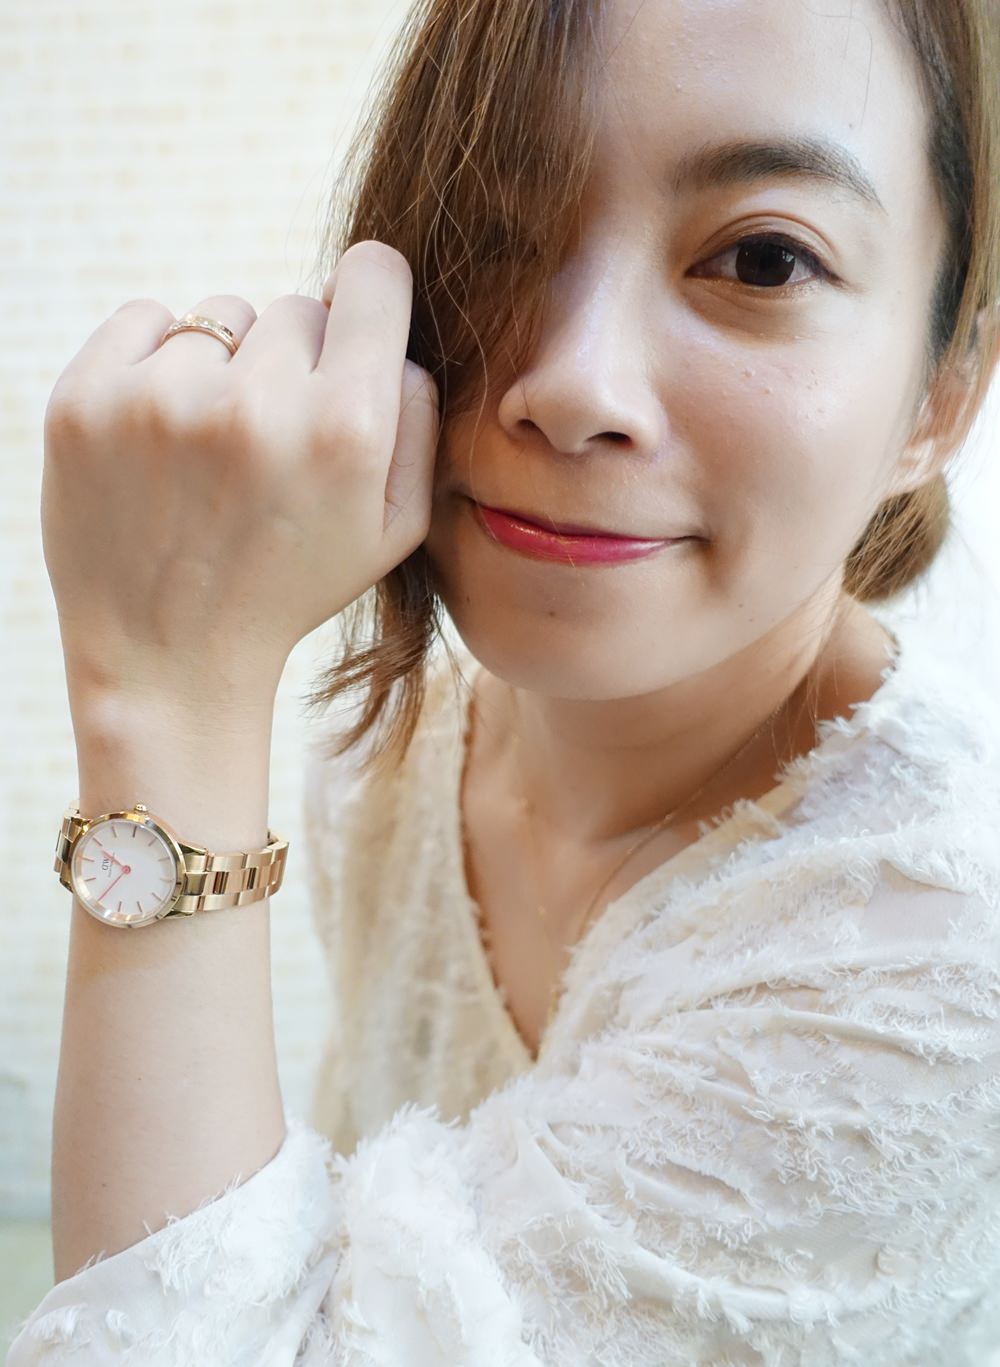 【DW折扣碼flowery】DW新錶金屬錶：ICONIC LINK～跟李聖經女神一樣的時尚小金錶